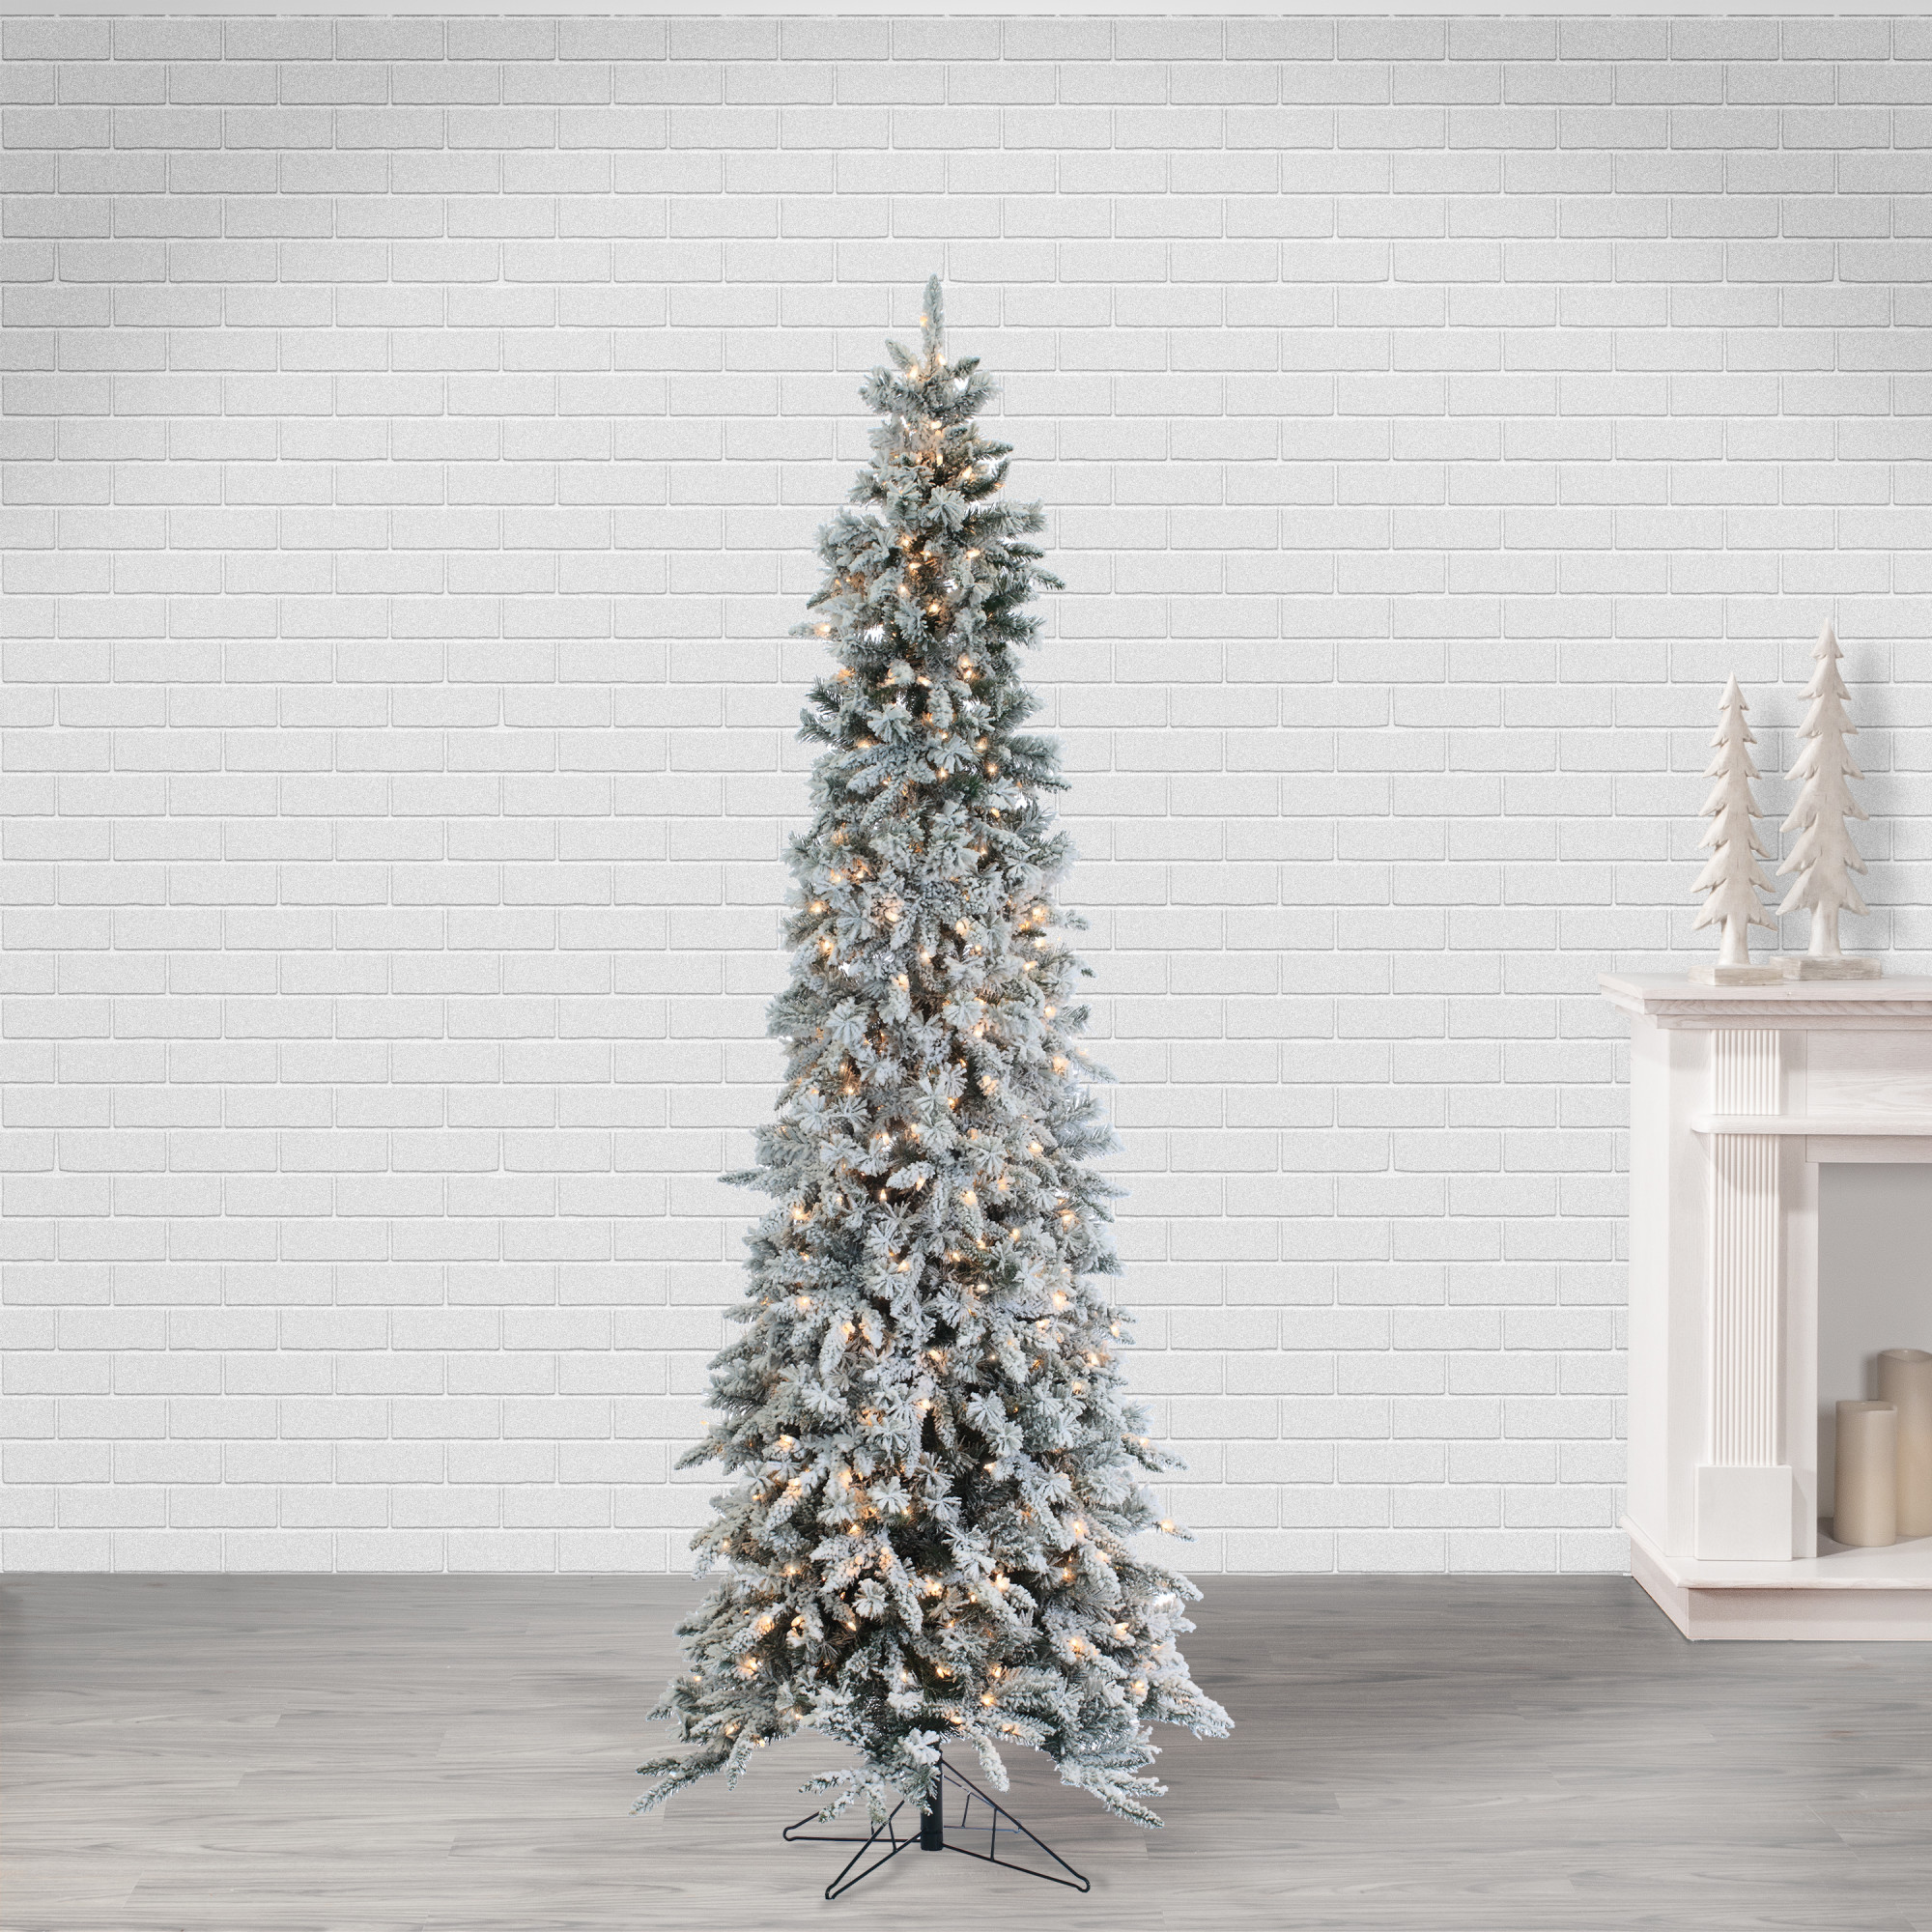 2Pack Artificial Snow Spray Christmas Tree Fake Snow Holiday Winter Crafts  decor